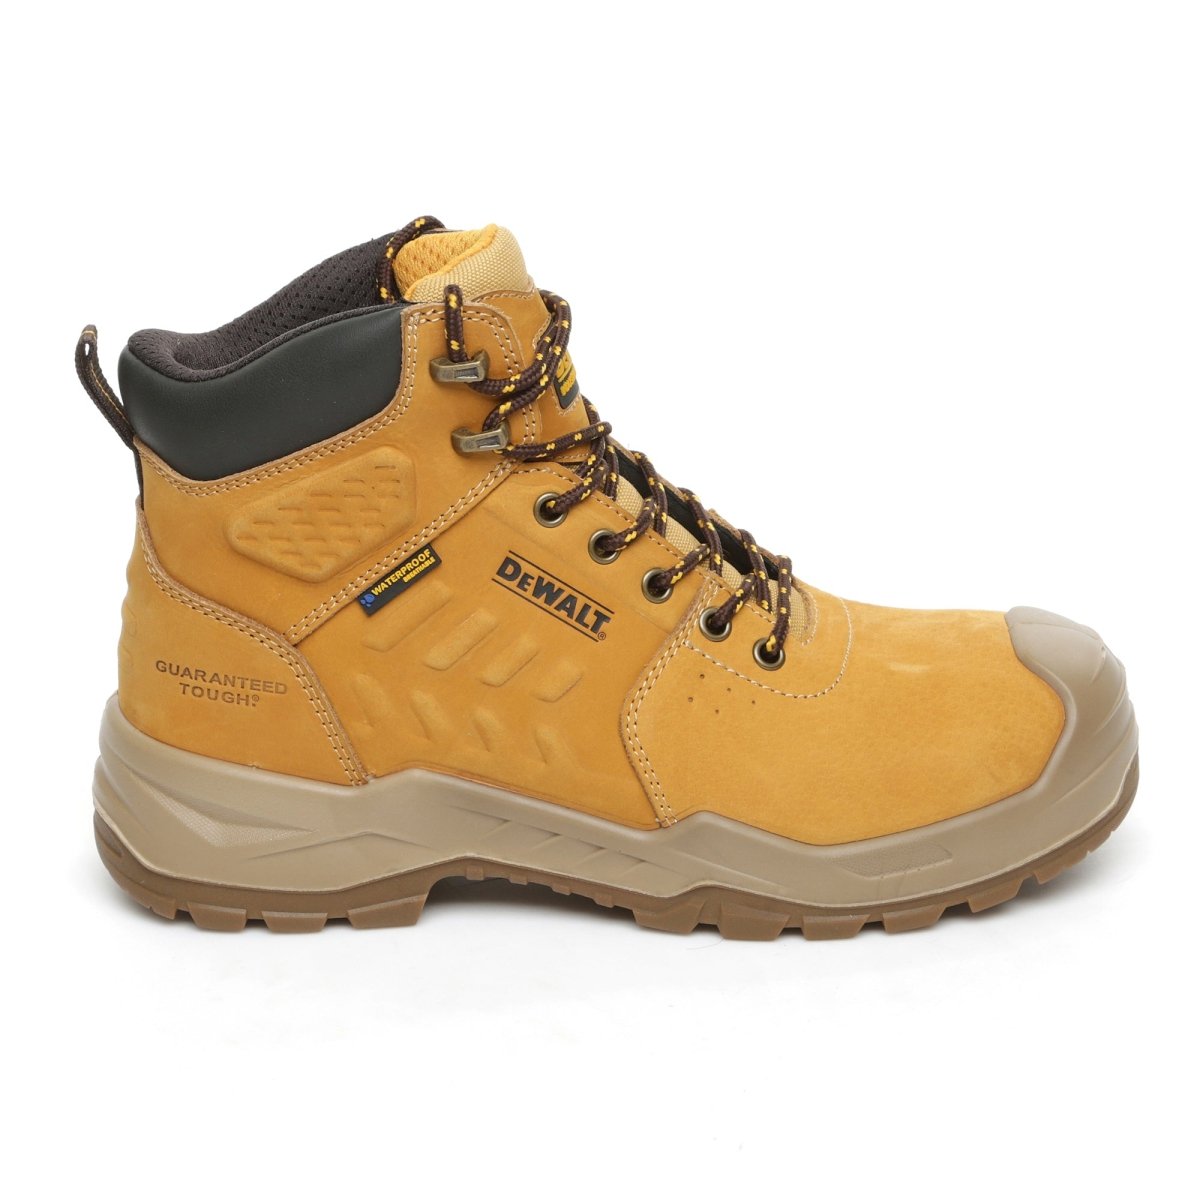 DeWalt Mentor S7 Waterproof Safety Hiker Boot - Shoe Store Direct